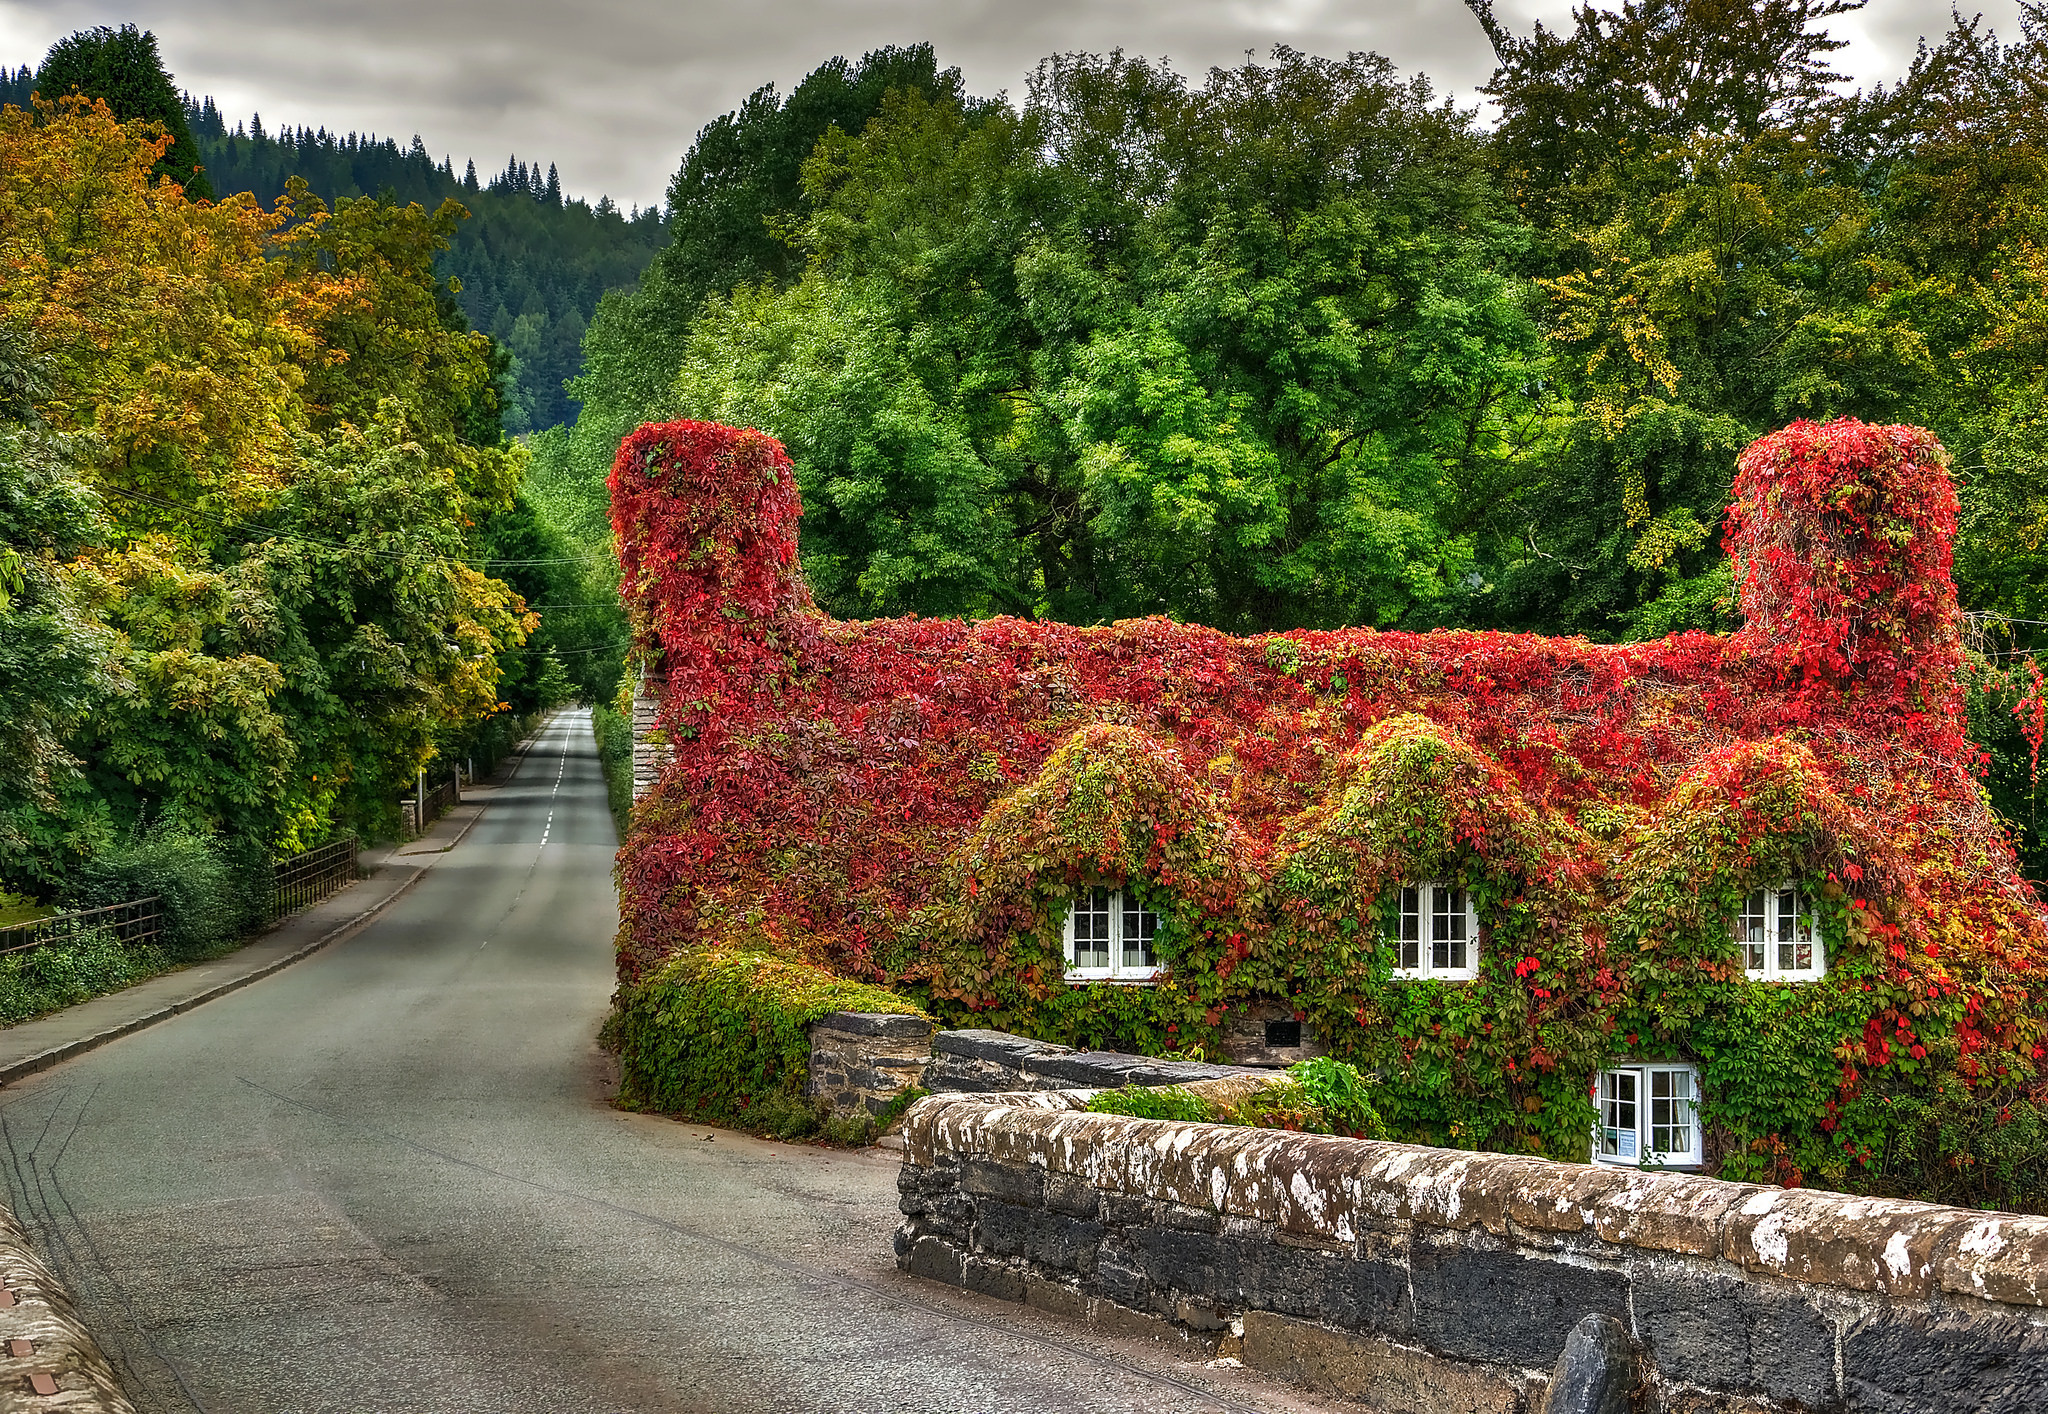 House Ivy Wales Foliage Leaf Road Fall 2048x1414